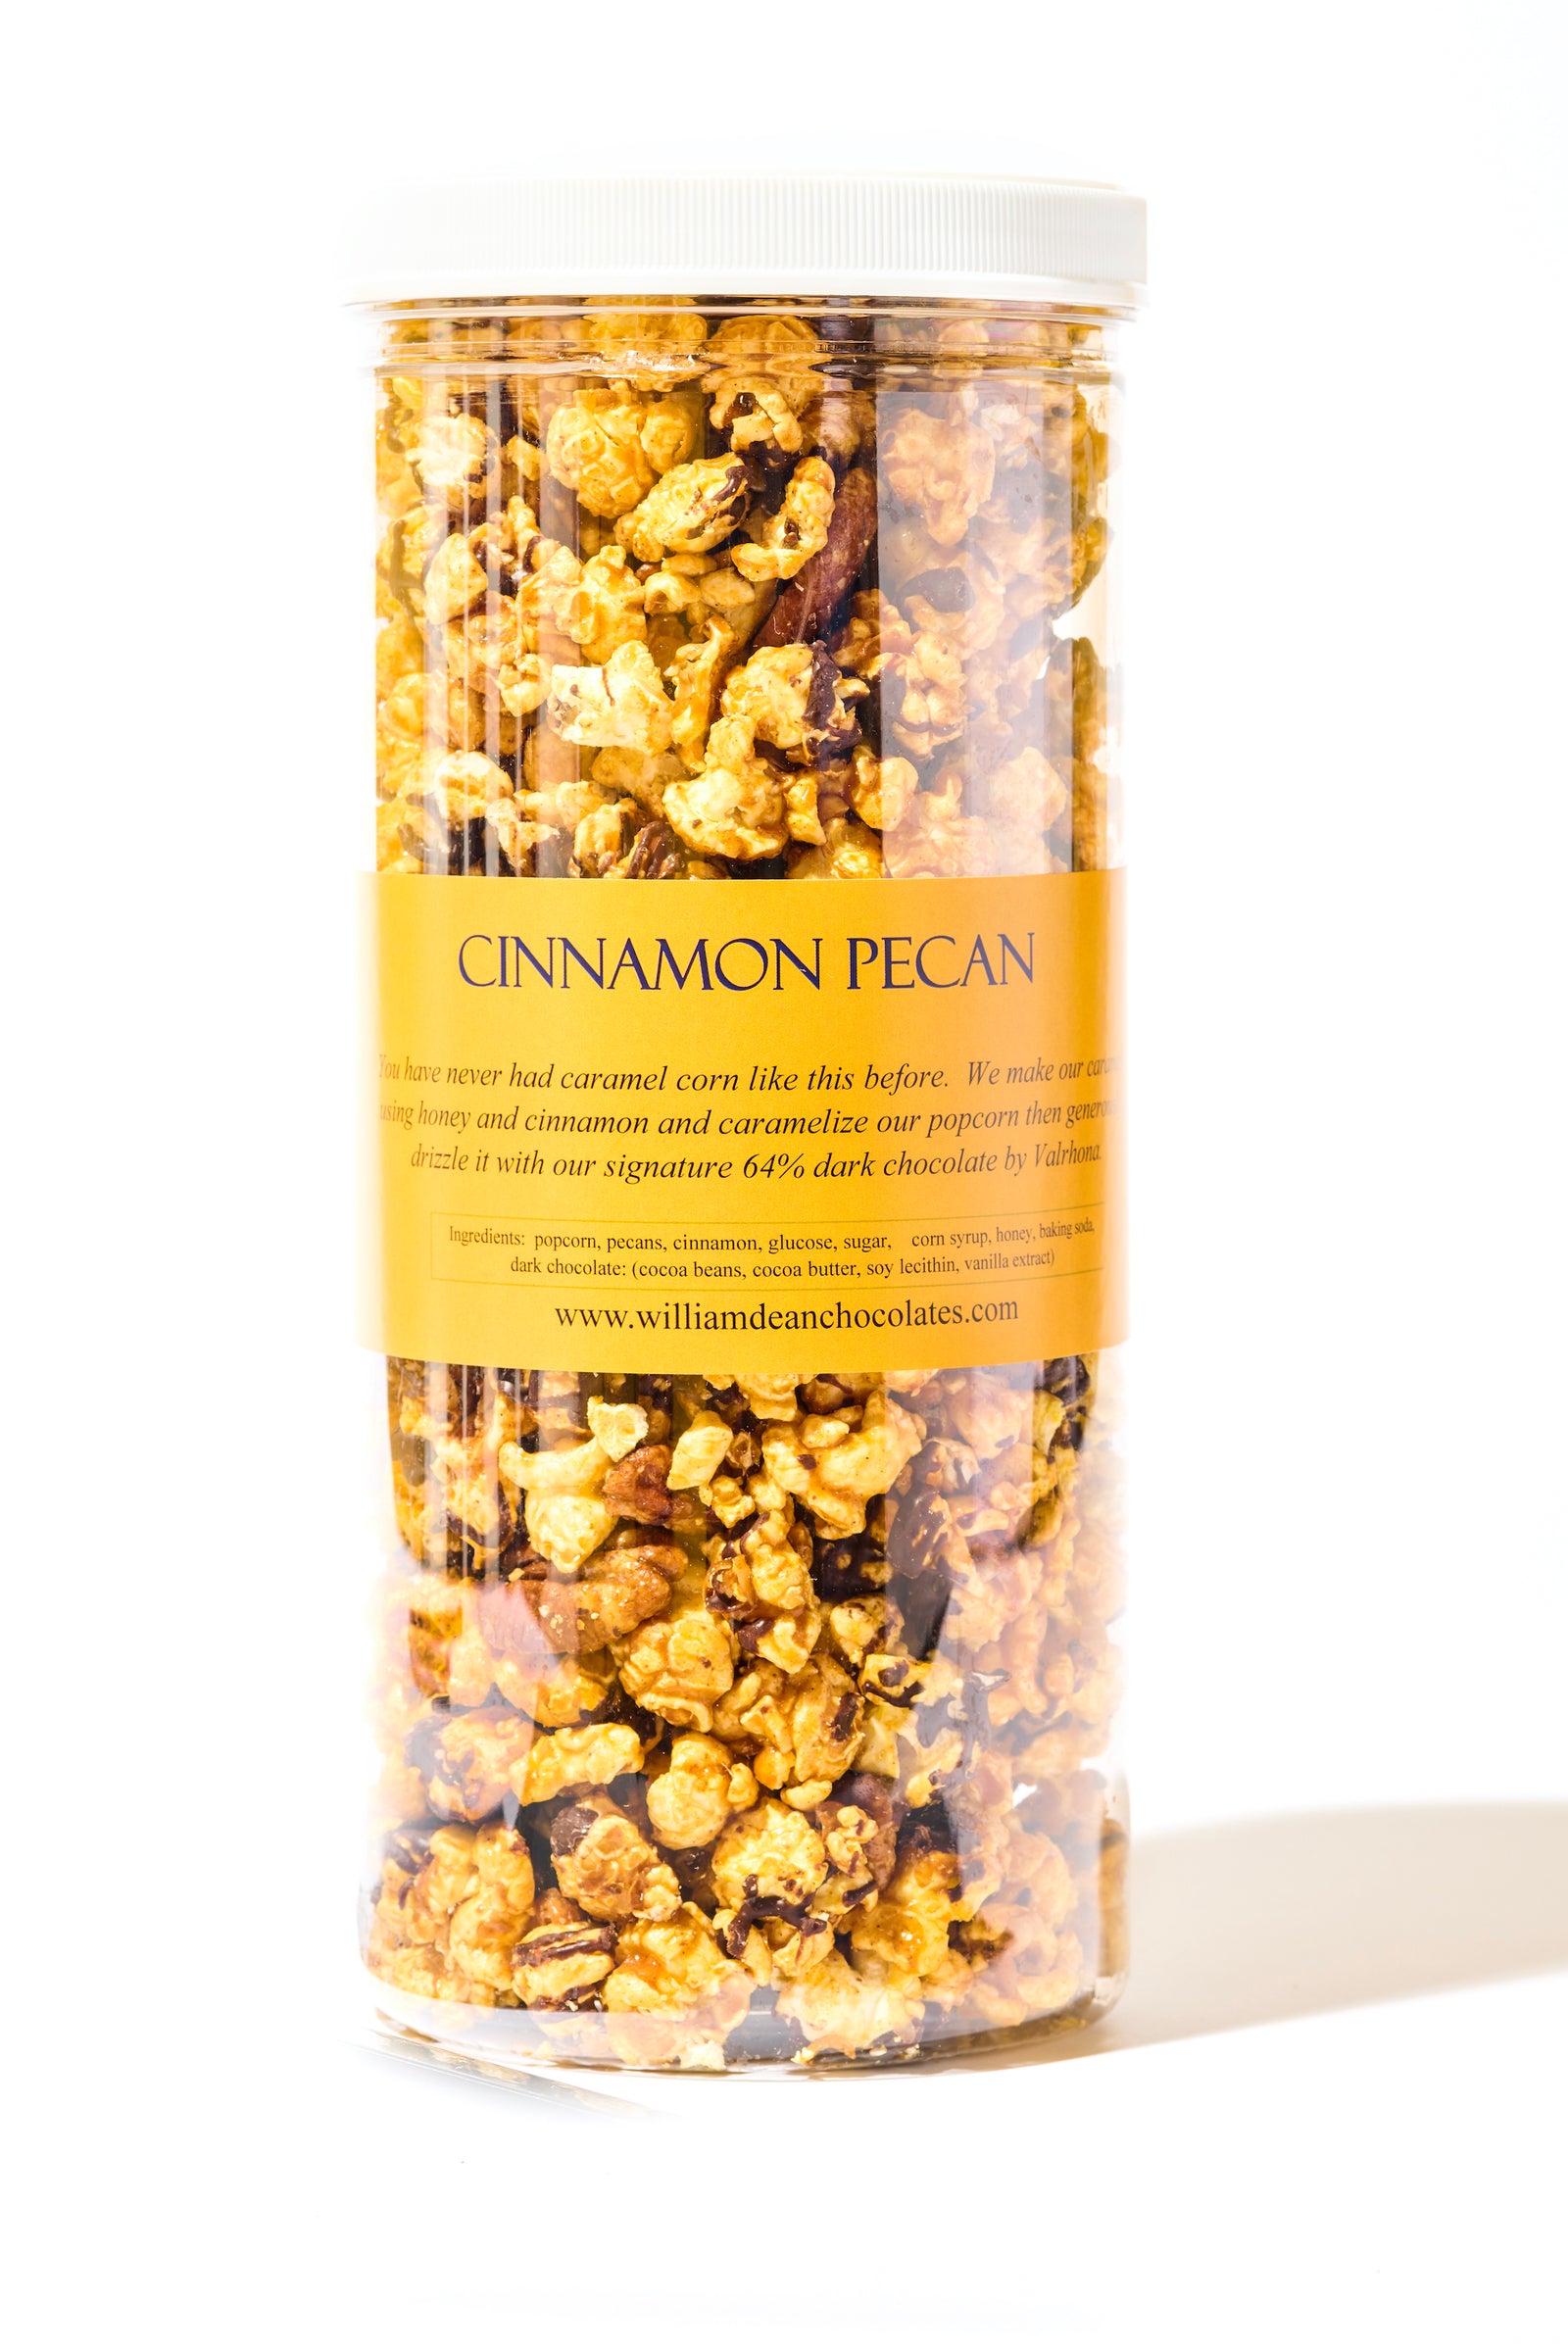 Cinnamon Pecan Caramel Corn with Dark Chocolate